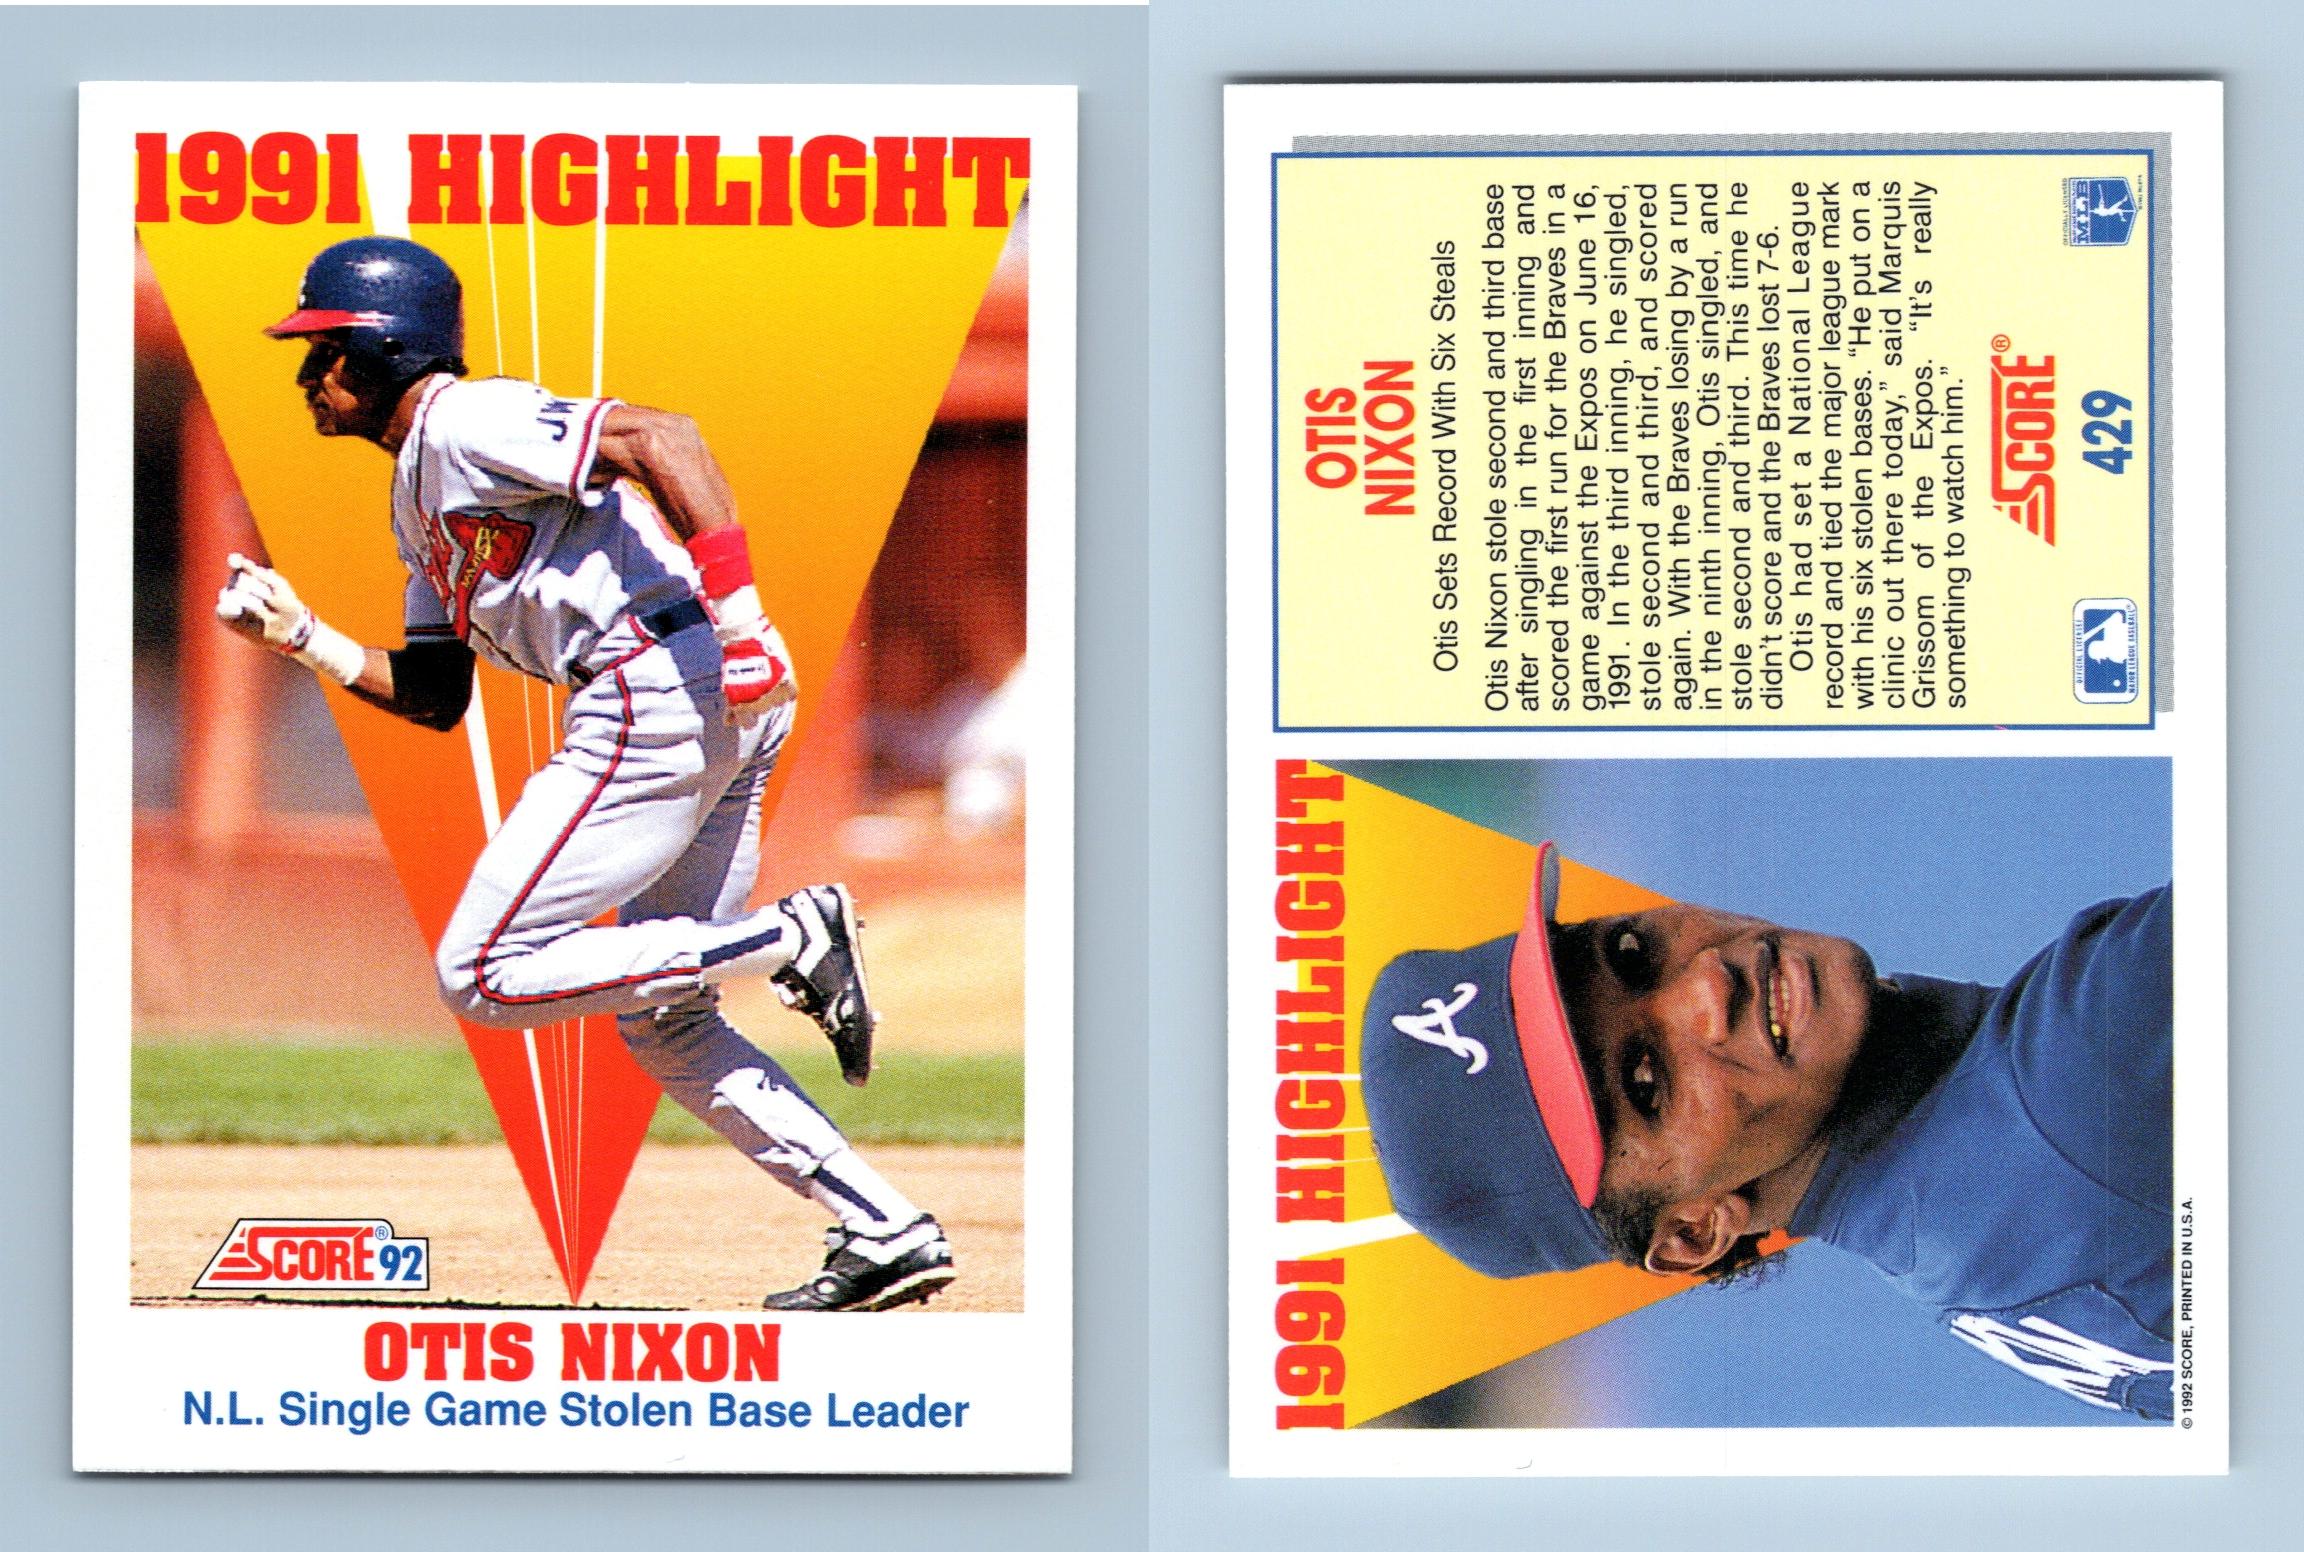 Otis Nixon - #429 Score 1992 Baseball 1991 Highlight Trading Card